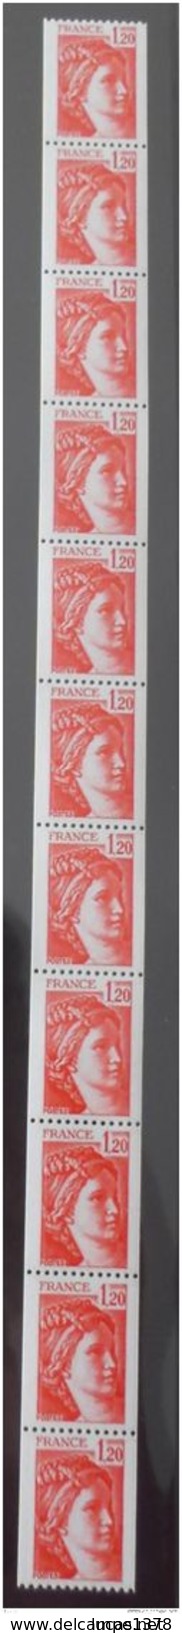 ROULETTE De 11 TIMBRES NO 1981B  Non Pliee NEUF ** - Coil Stamps